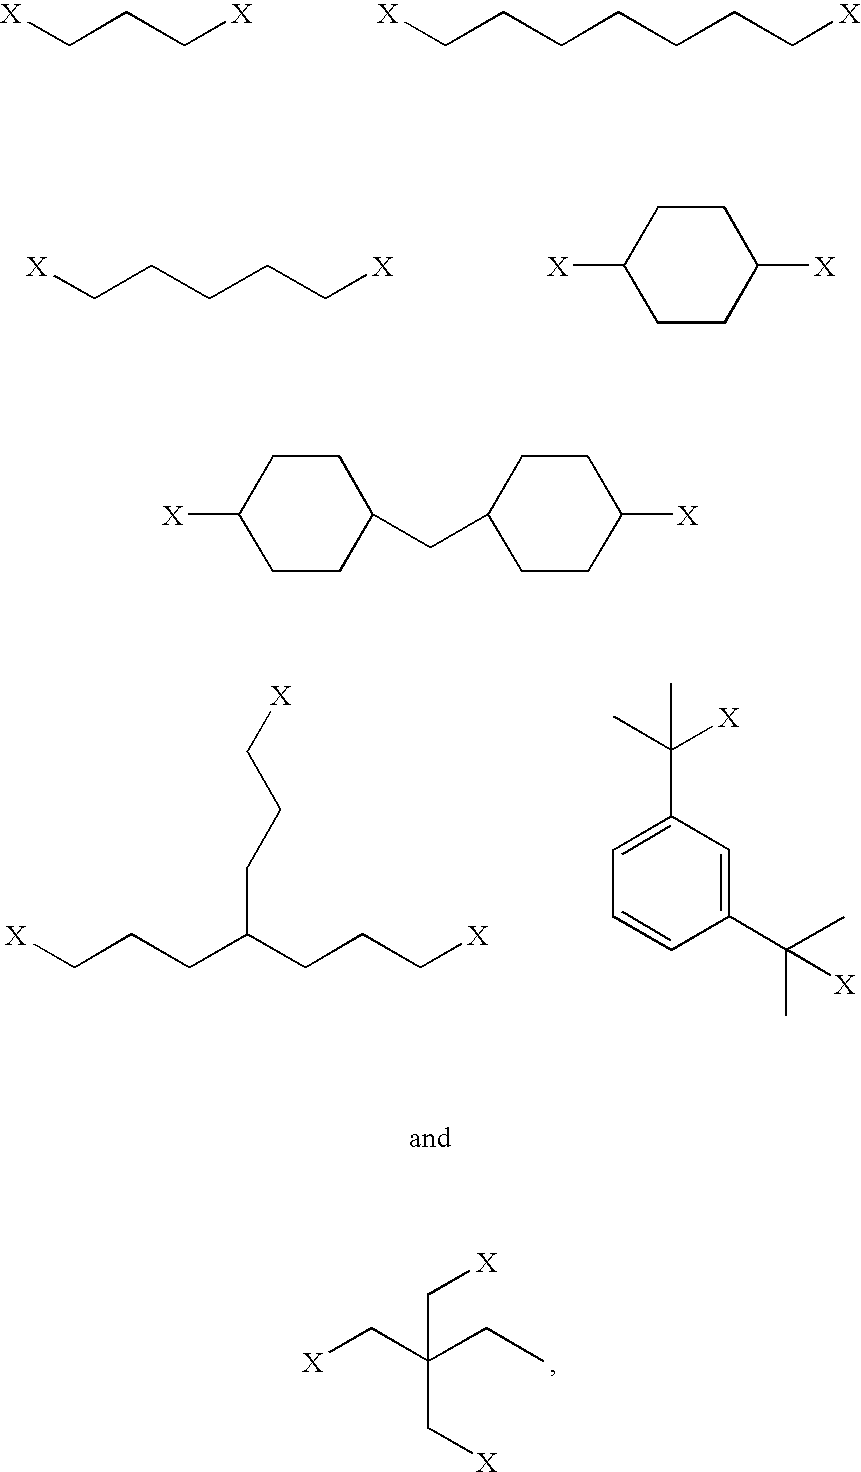 Powder coatings containing oxirane groups beta to urethane or urea groups